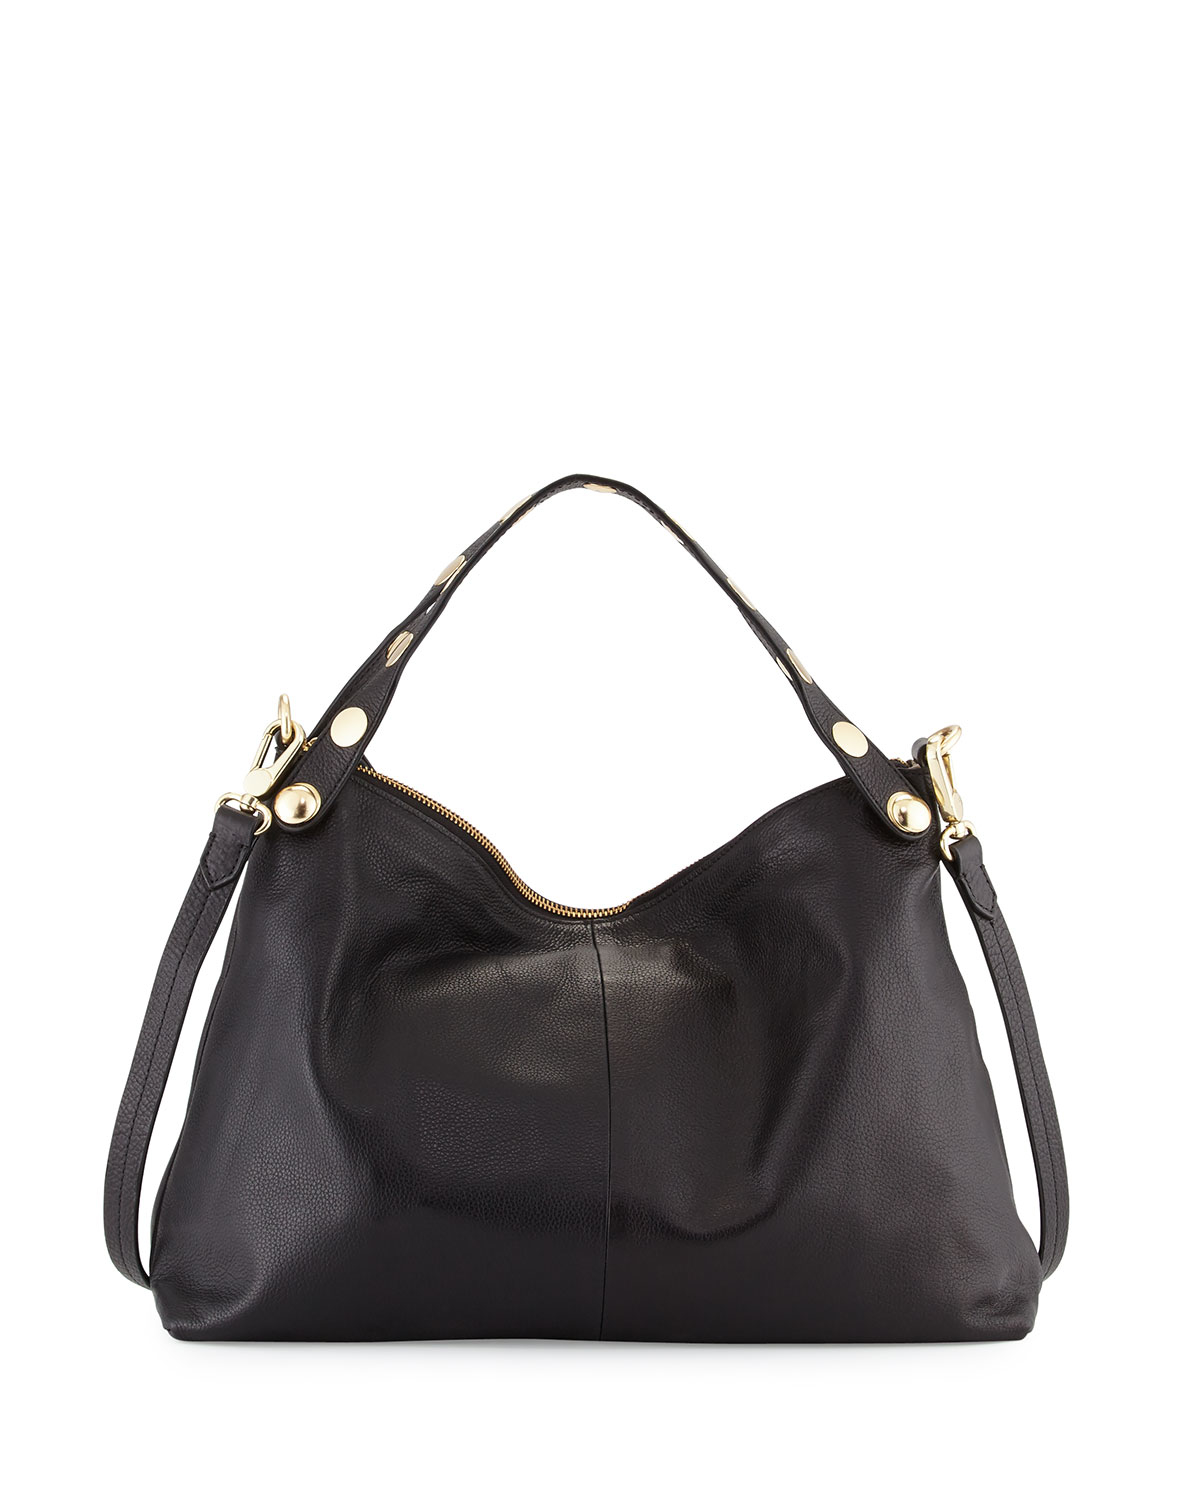 Foley Corinna Handbags. Foley + Corinna Framed Mini Shopper Top Handle ...